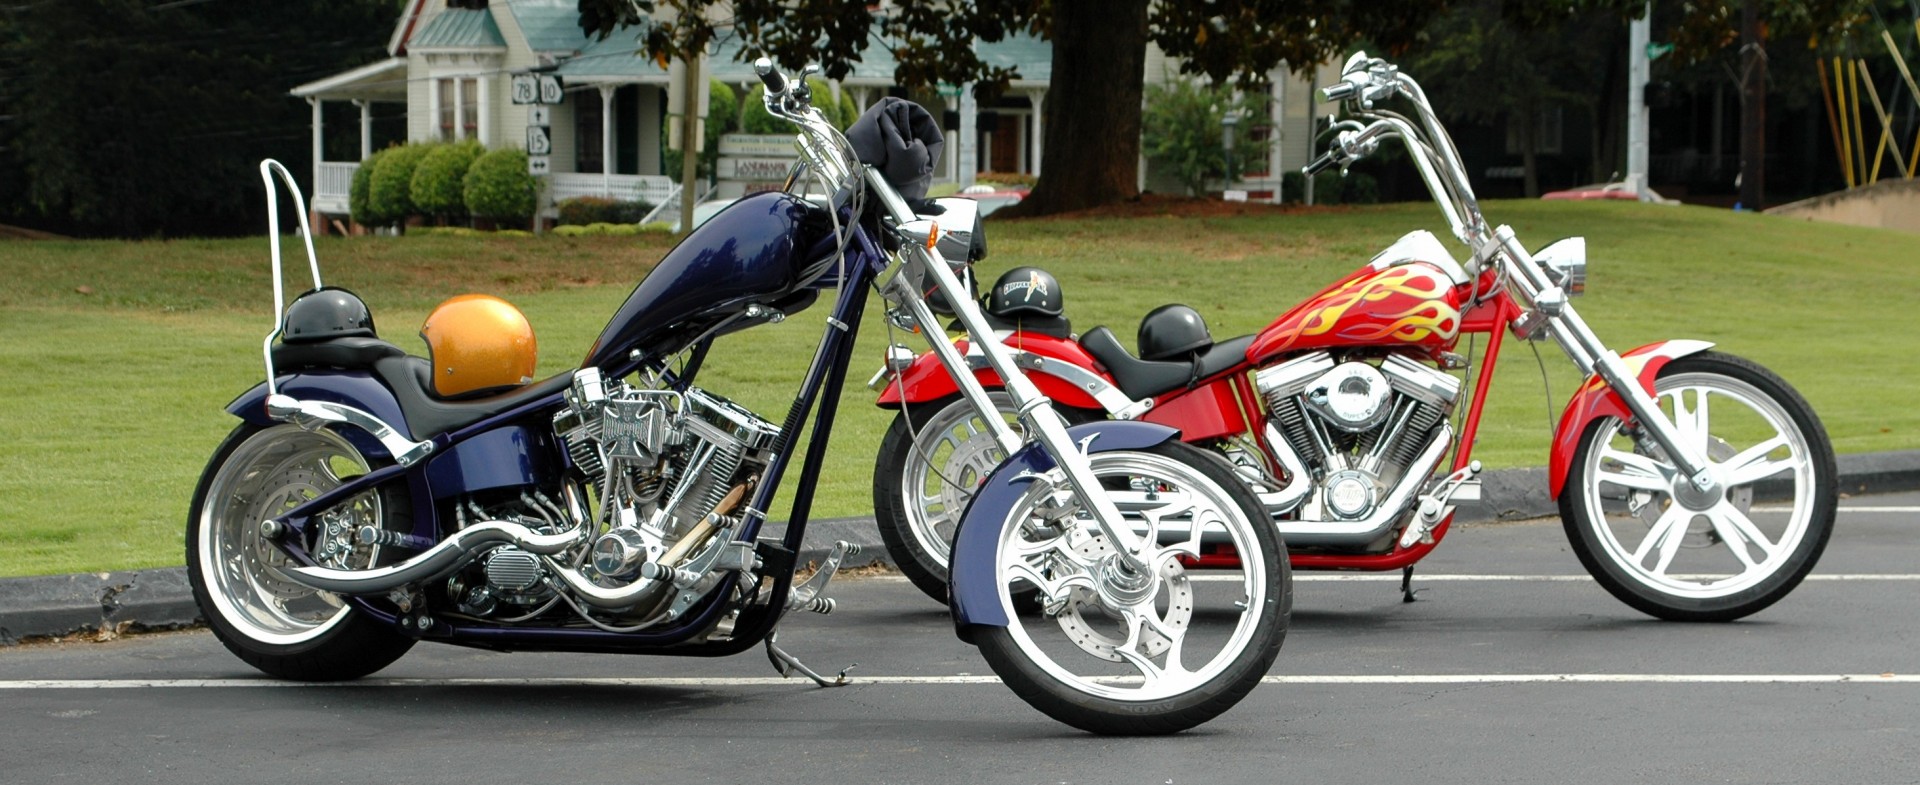 Chopper Motorcycles